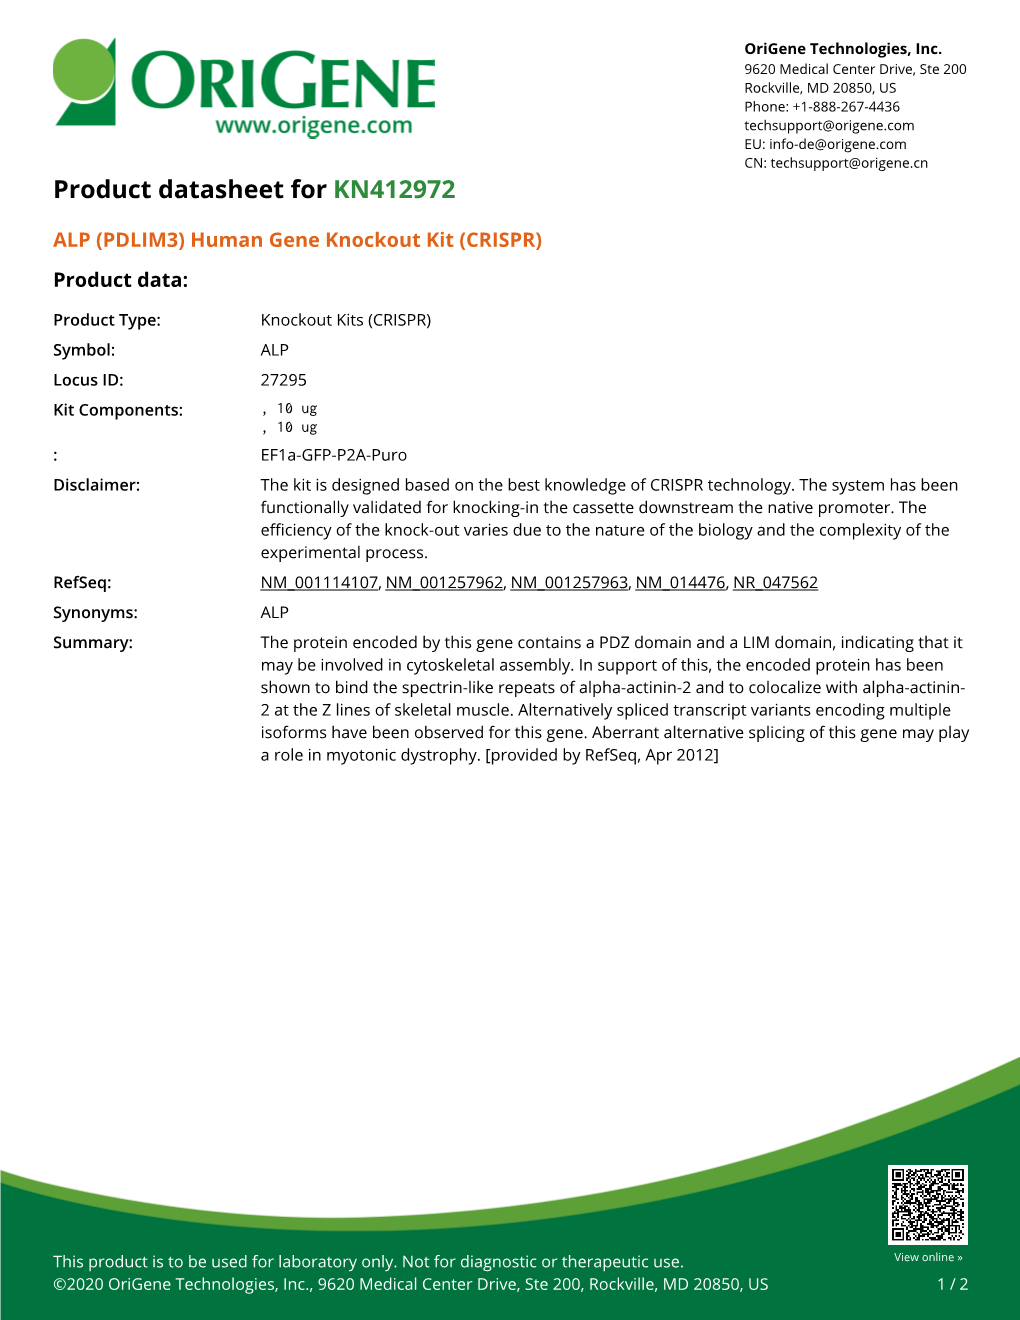 ALP (PDLIM3) Human Gene Knockout Kit (CRISPR) Product Data